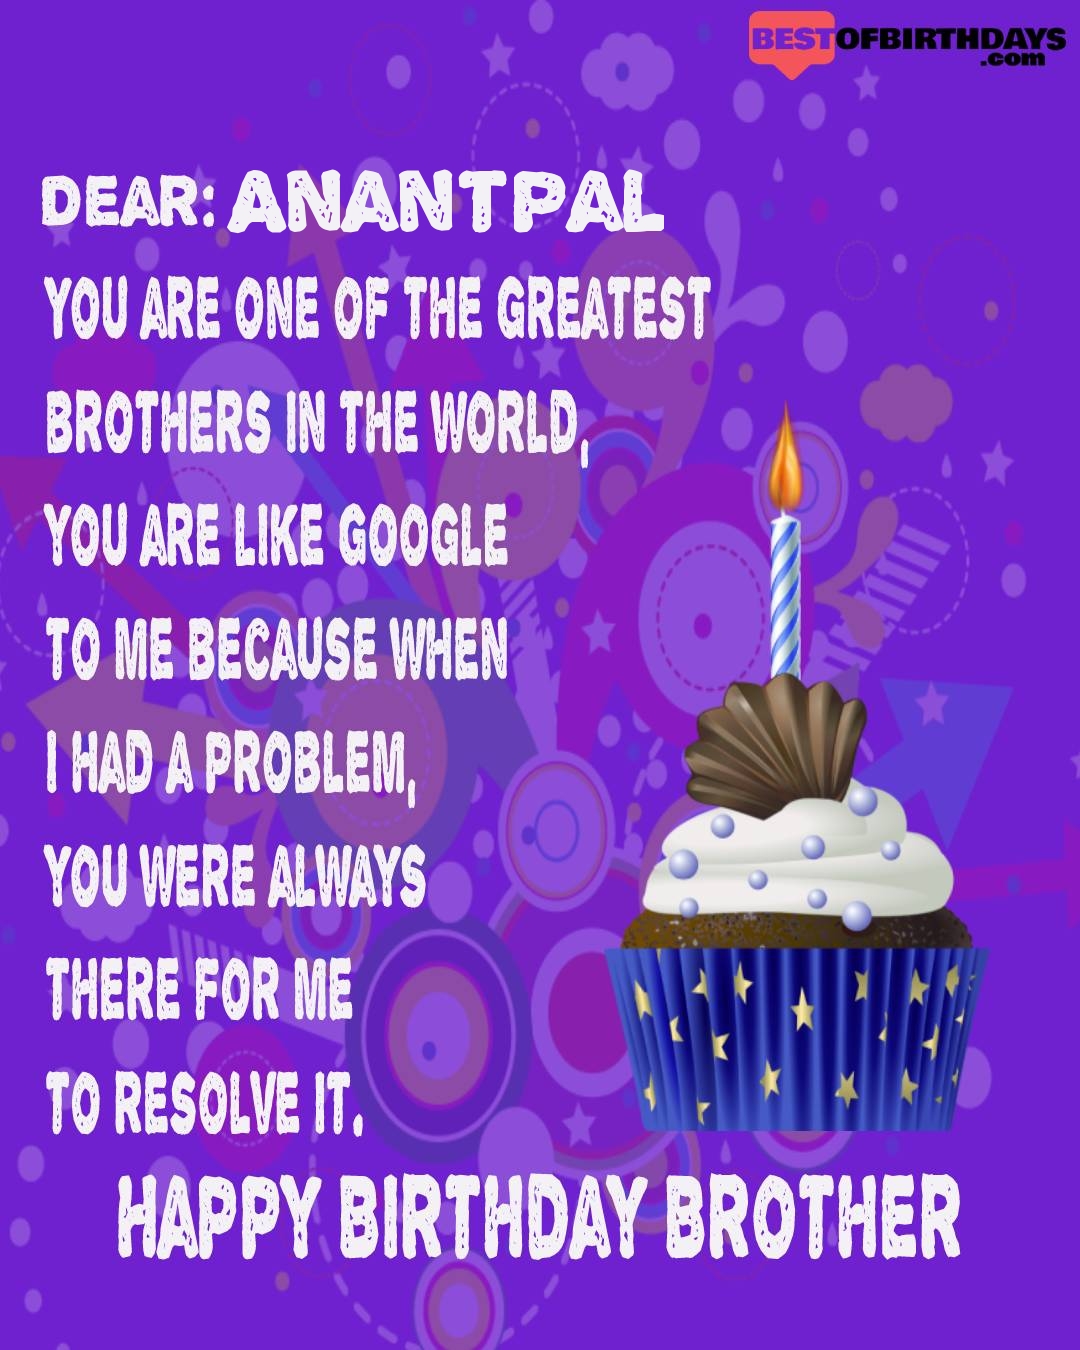 Happy birthday anantpal bhai brother bro